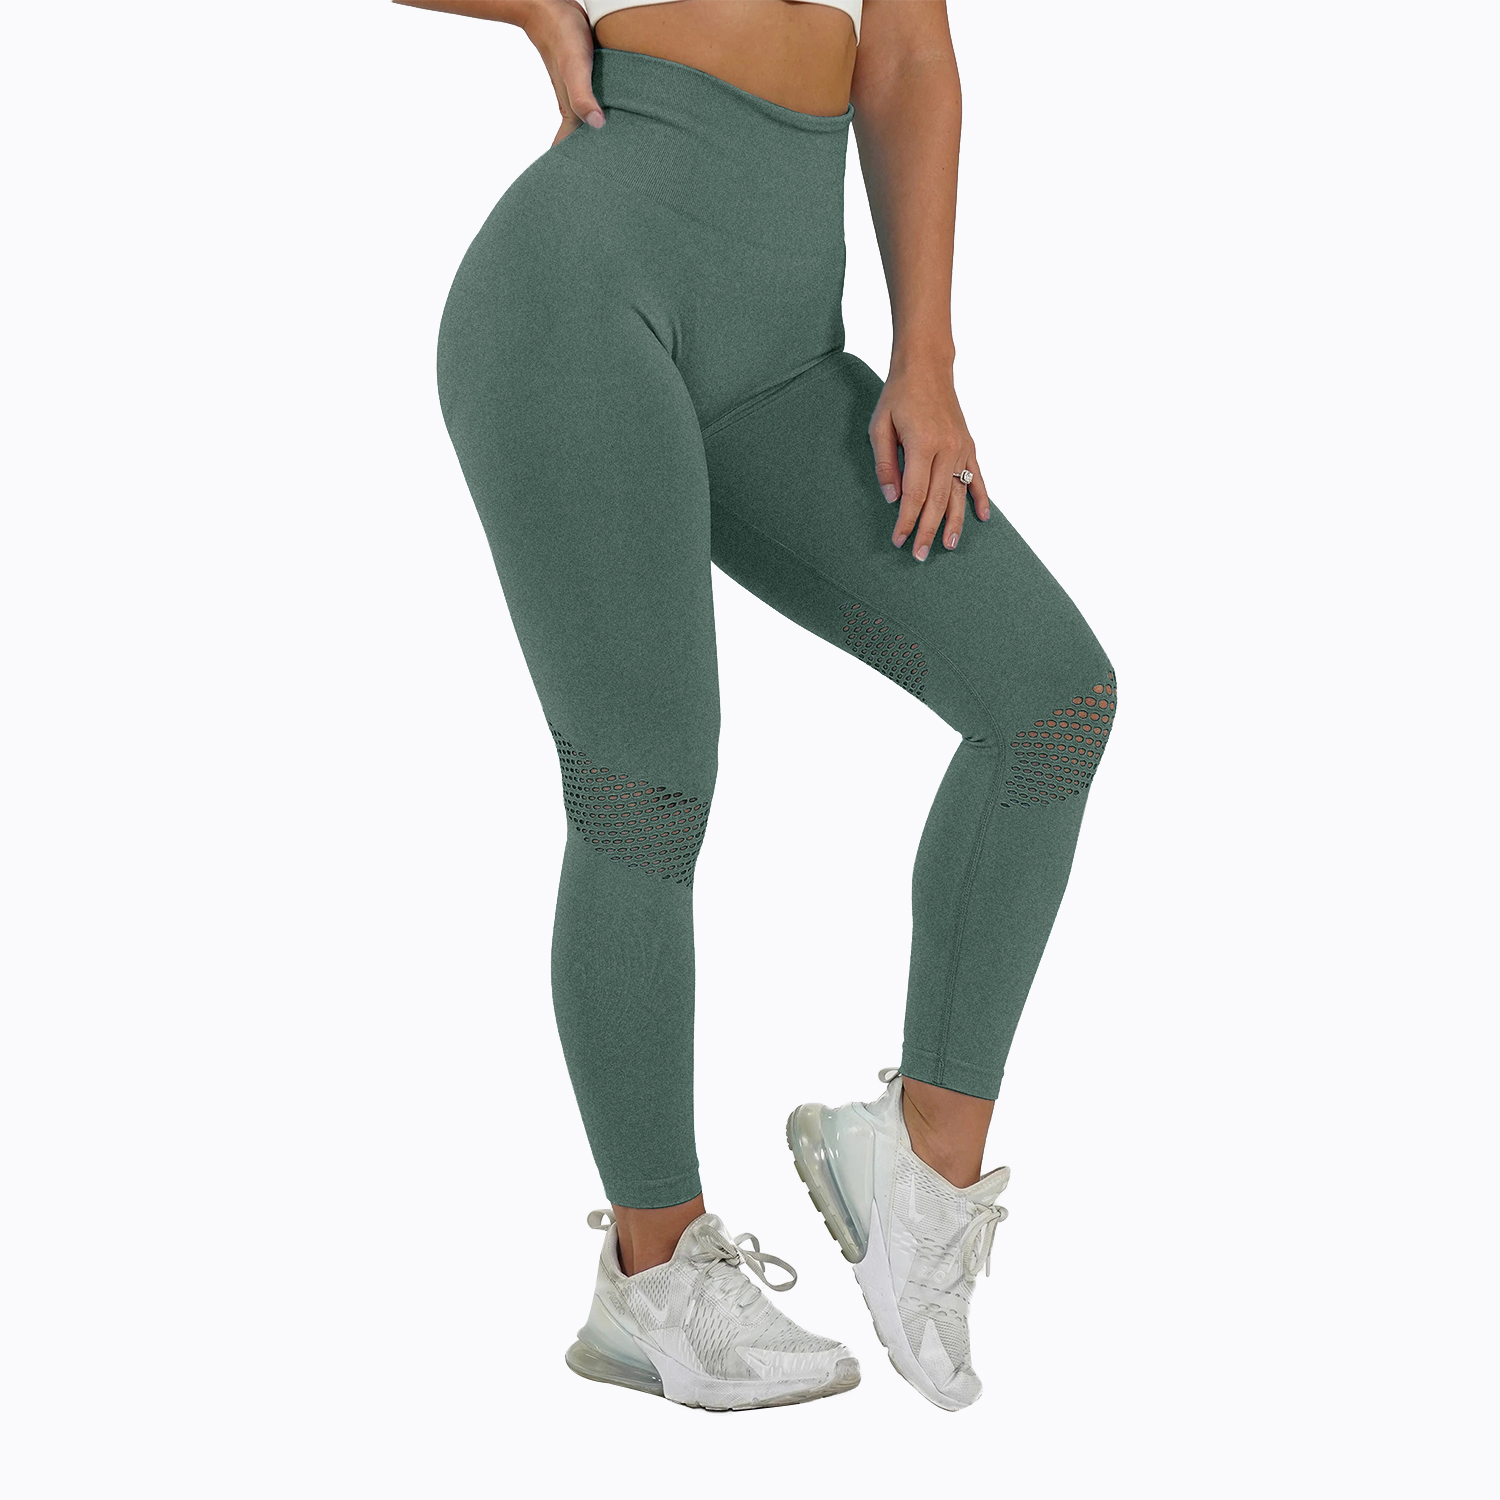 Wholesale Fitness Nylon Lycra Fabric Gym Compression Leggings Womens Workout Pants